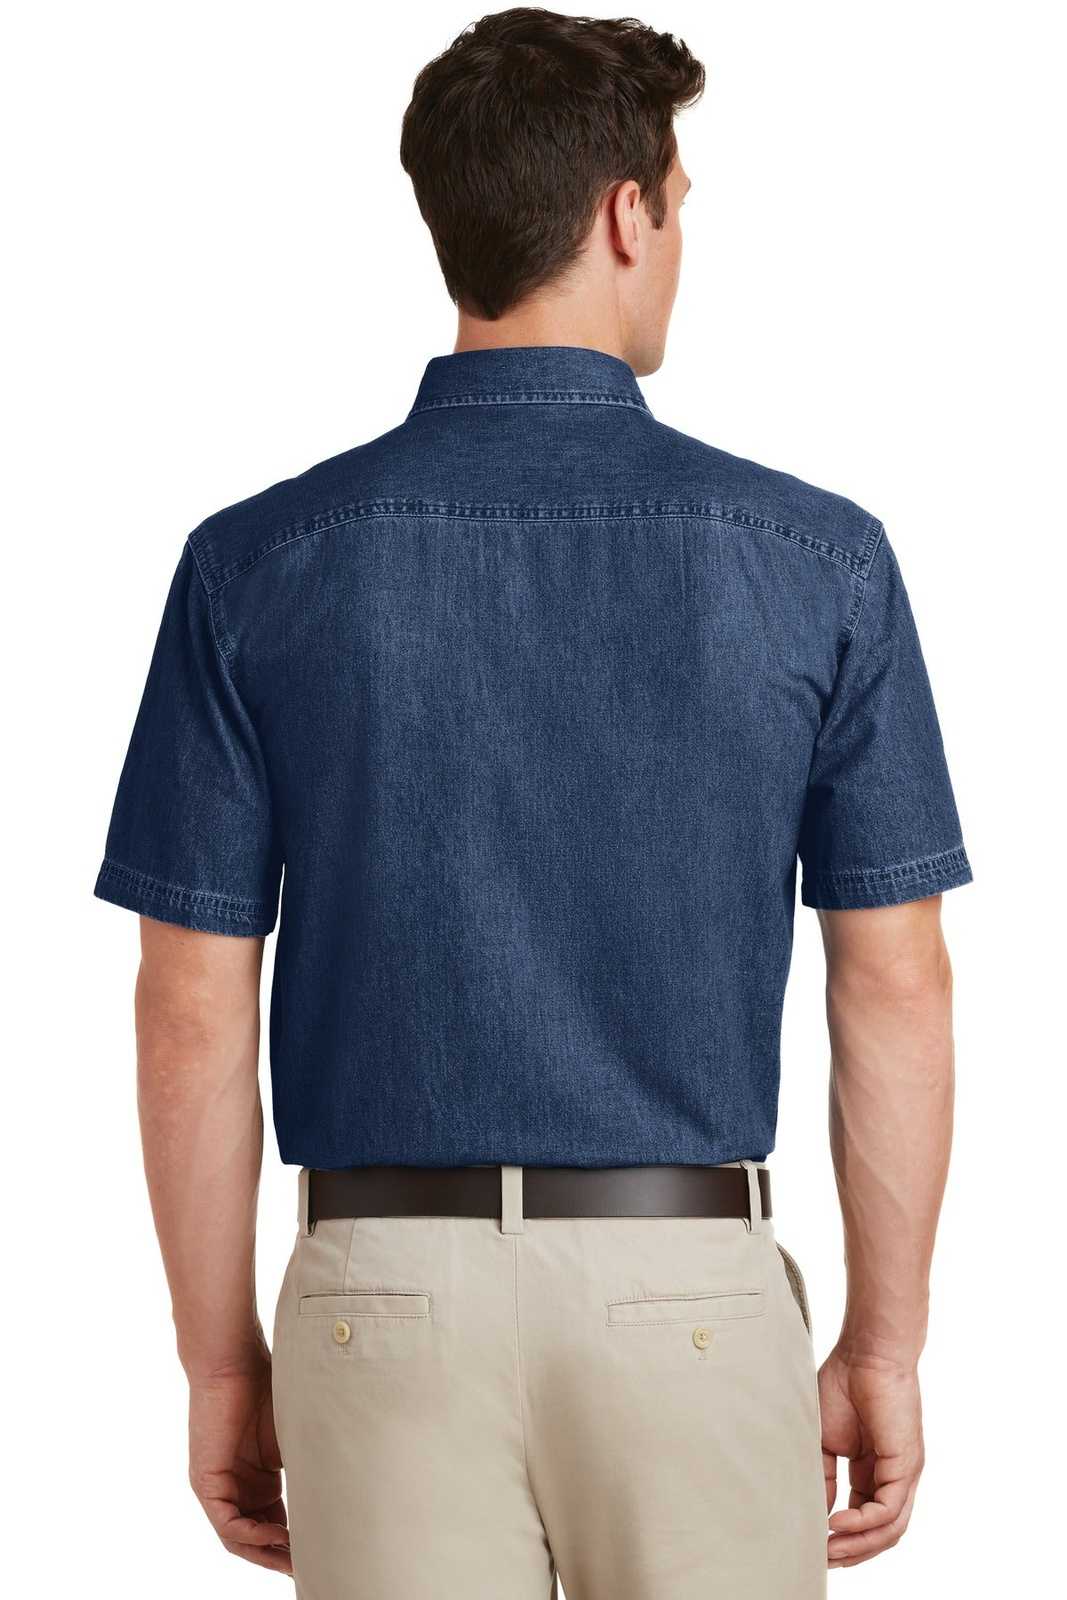 Port &amp; Company SP11 Short Sleeve Value Denim Shirt - Ink Blue - HIT a Double - 2